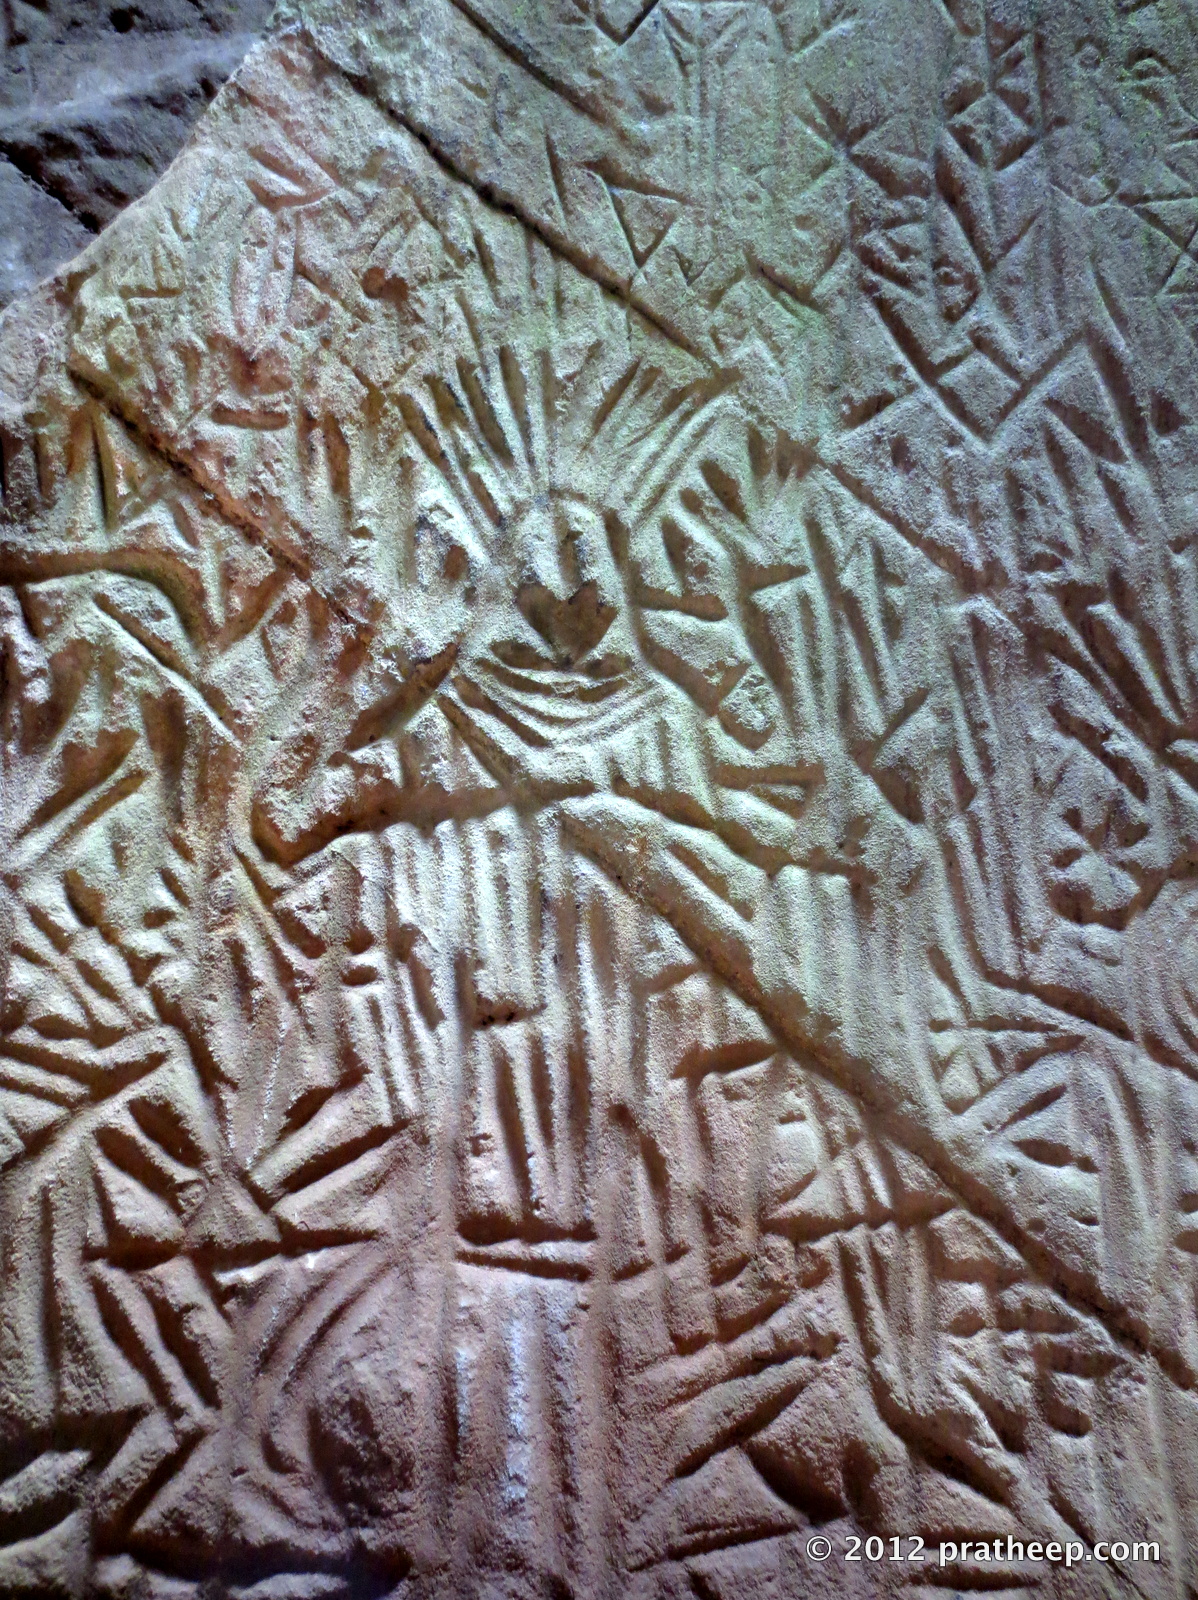 The most prominent Petroglyph at Edakkal Caves